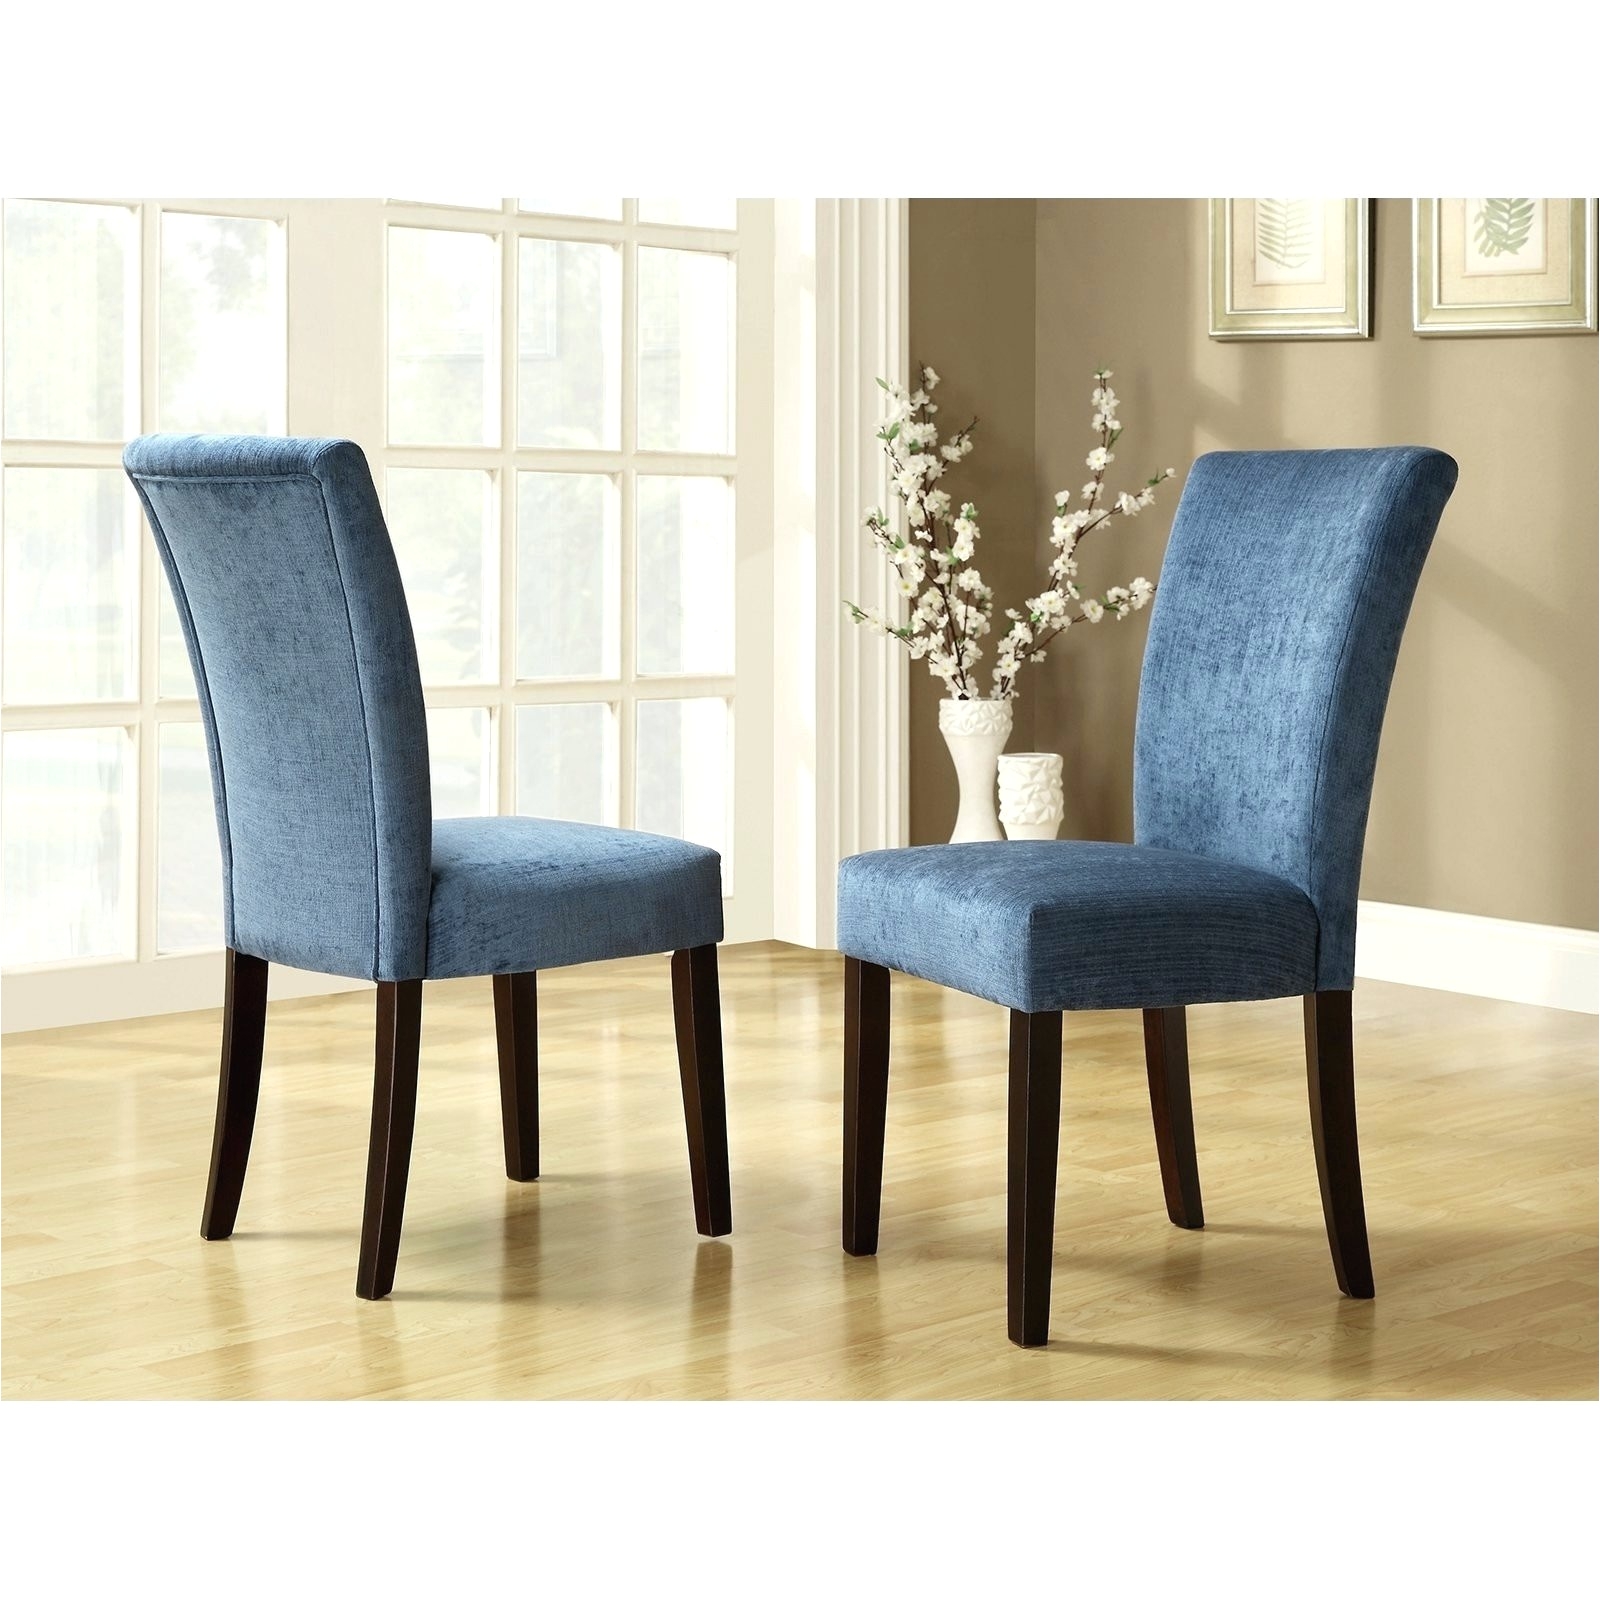 Мягкий стол стул. Стул Dining Chair Foucault Blue. Стул Pescara. Lisette Dining Chair.